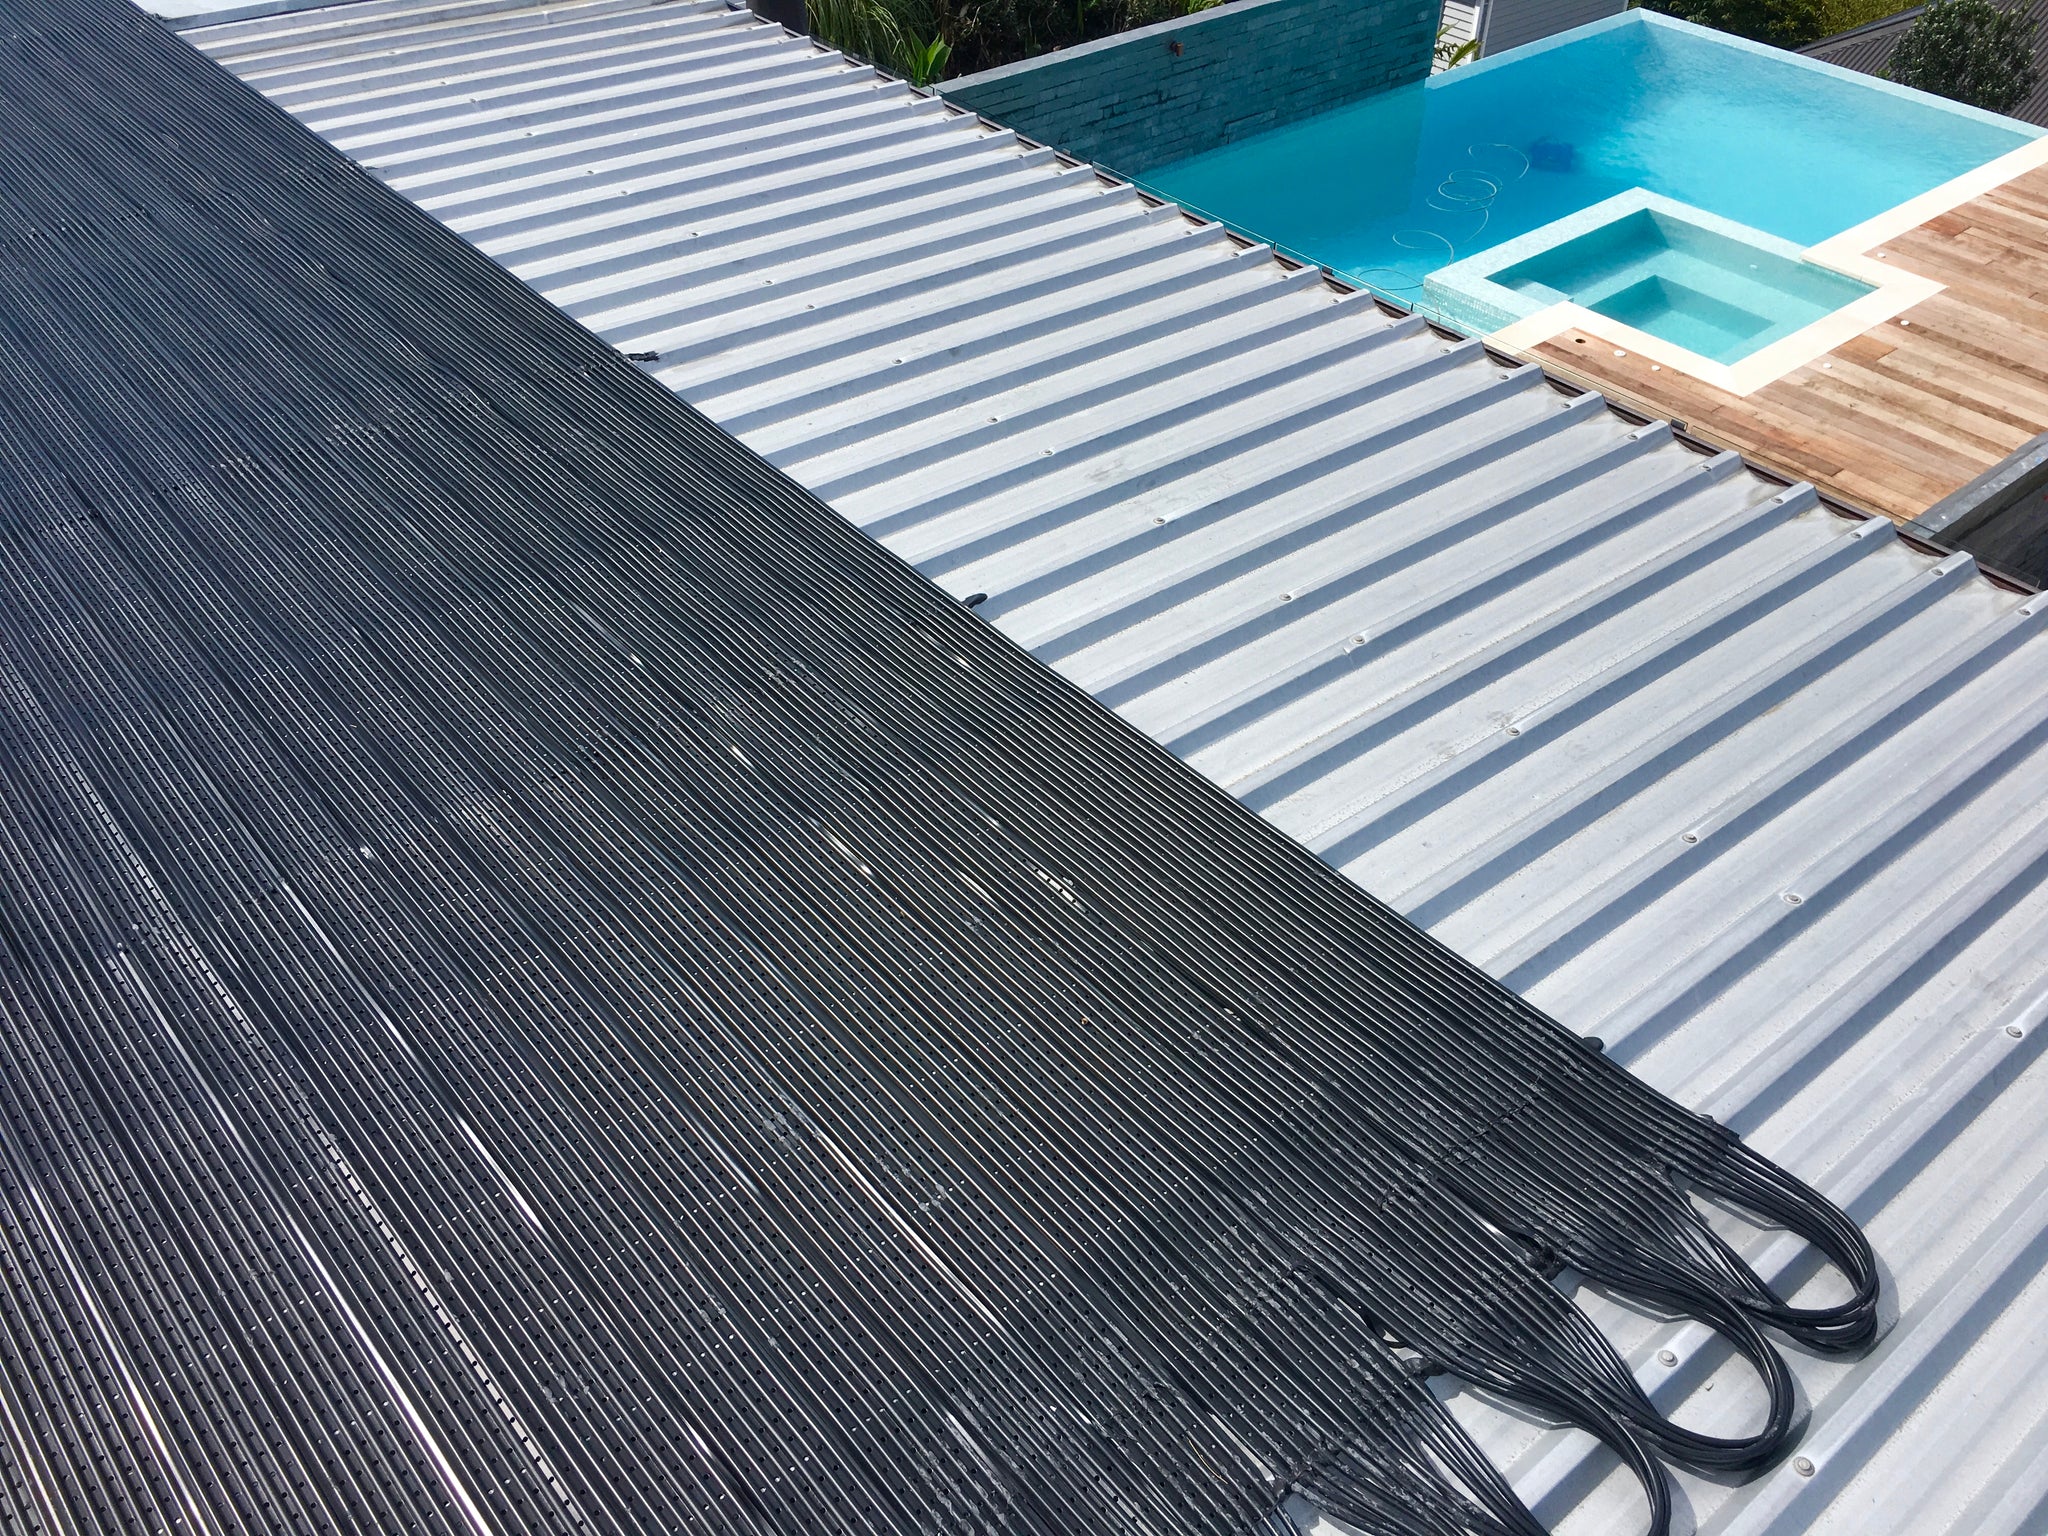 Solar panel vs rubber matting